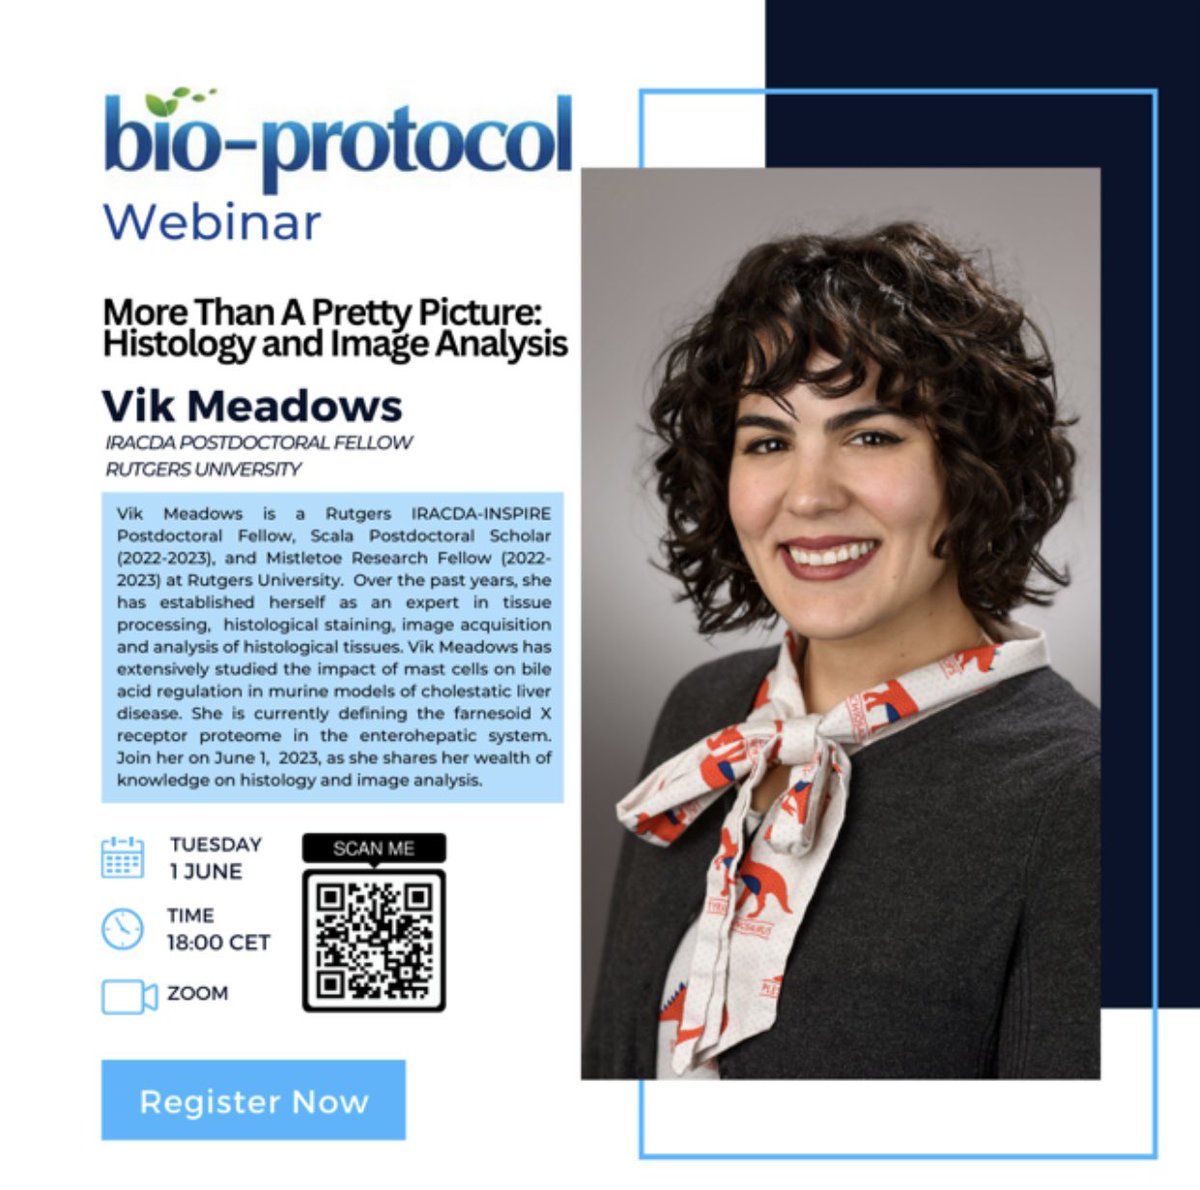 Bio-protocol webinar on Imaging Technique with IUSM alumni Dr. Vik Meadows @TXevergreengirl Thursday, June 1st 12:00pm EST Register at: qr.codes/CwBFEL